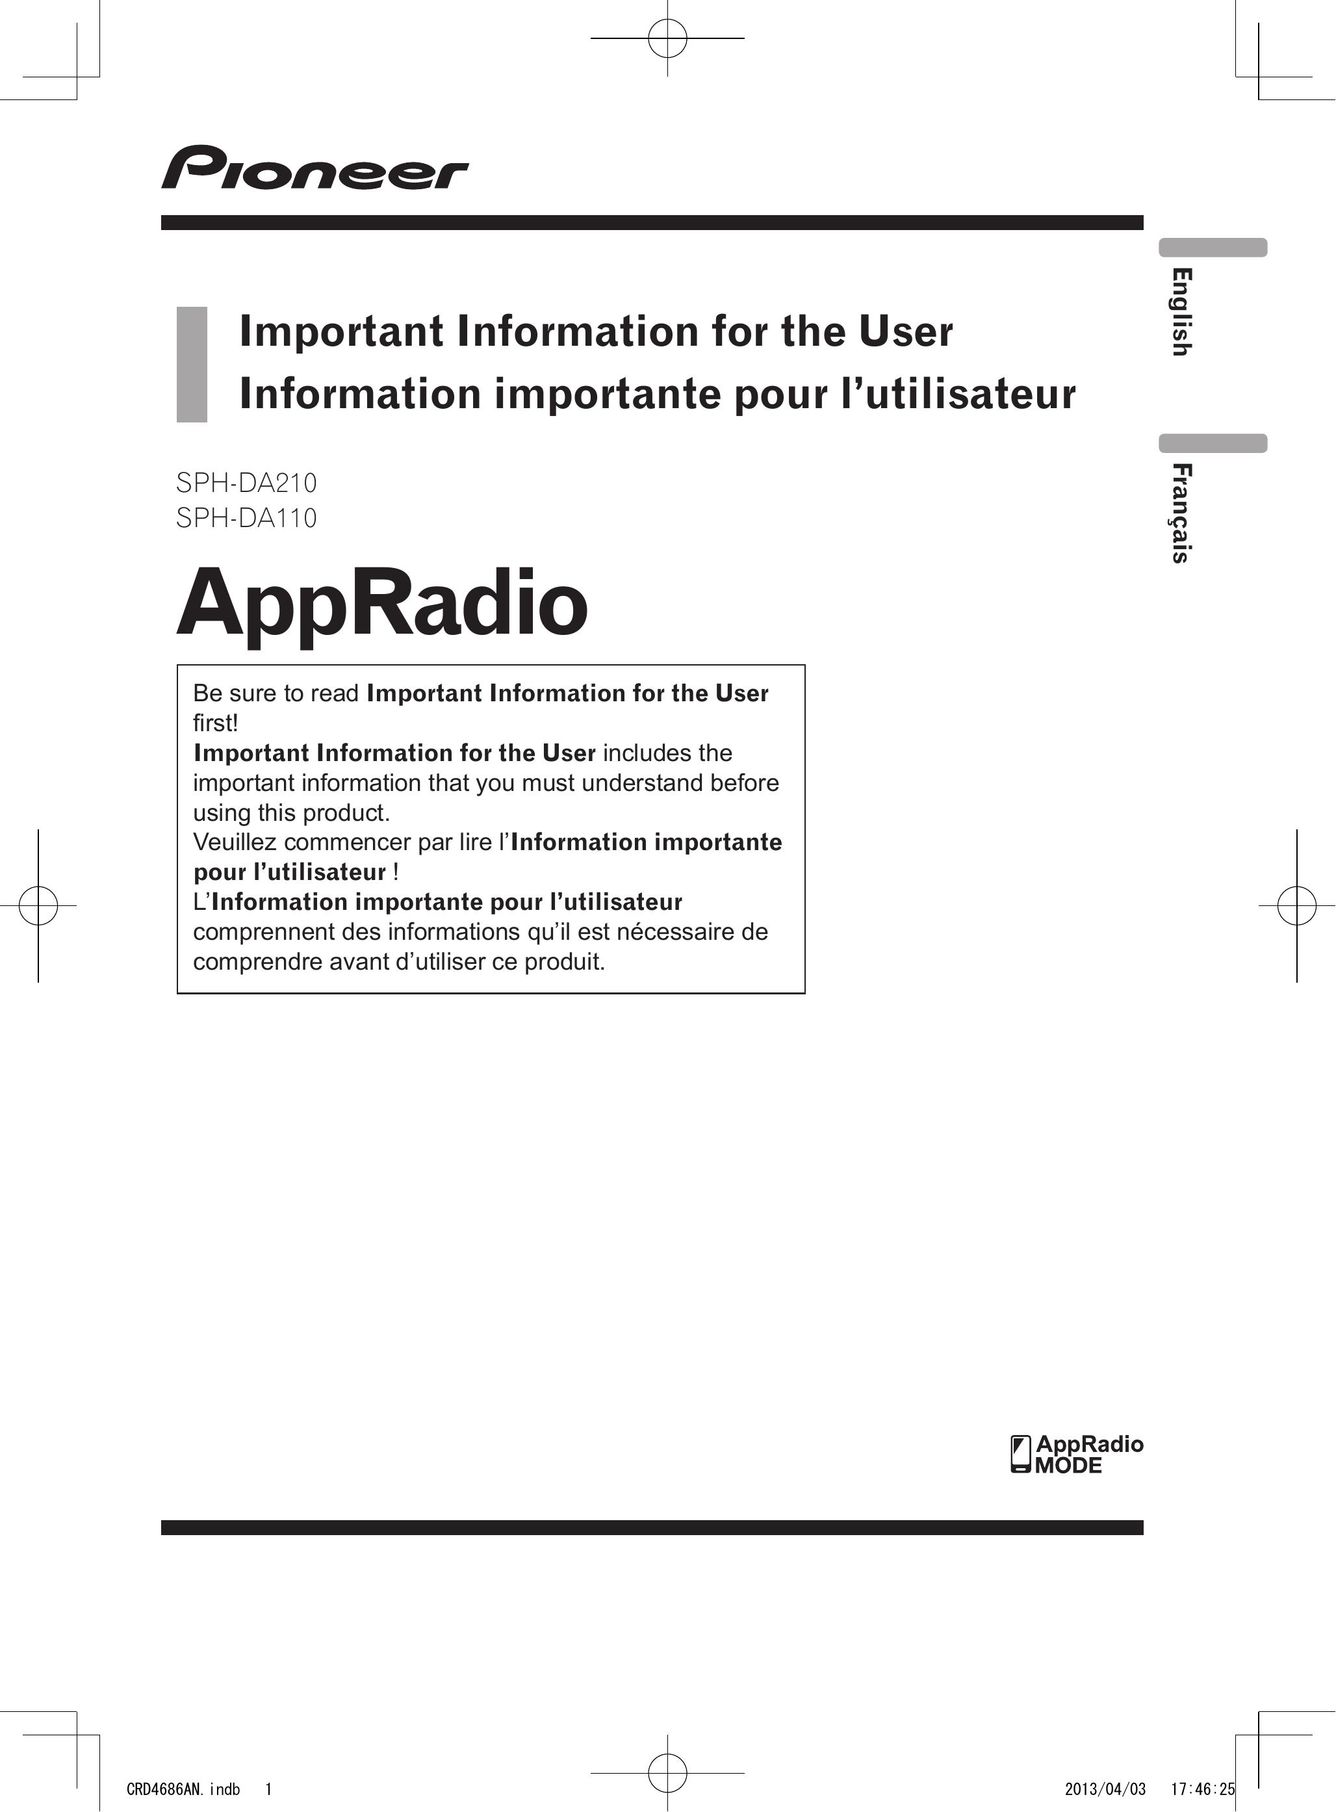 Pioneer SPH-DA110 Radio User Manual